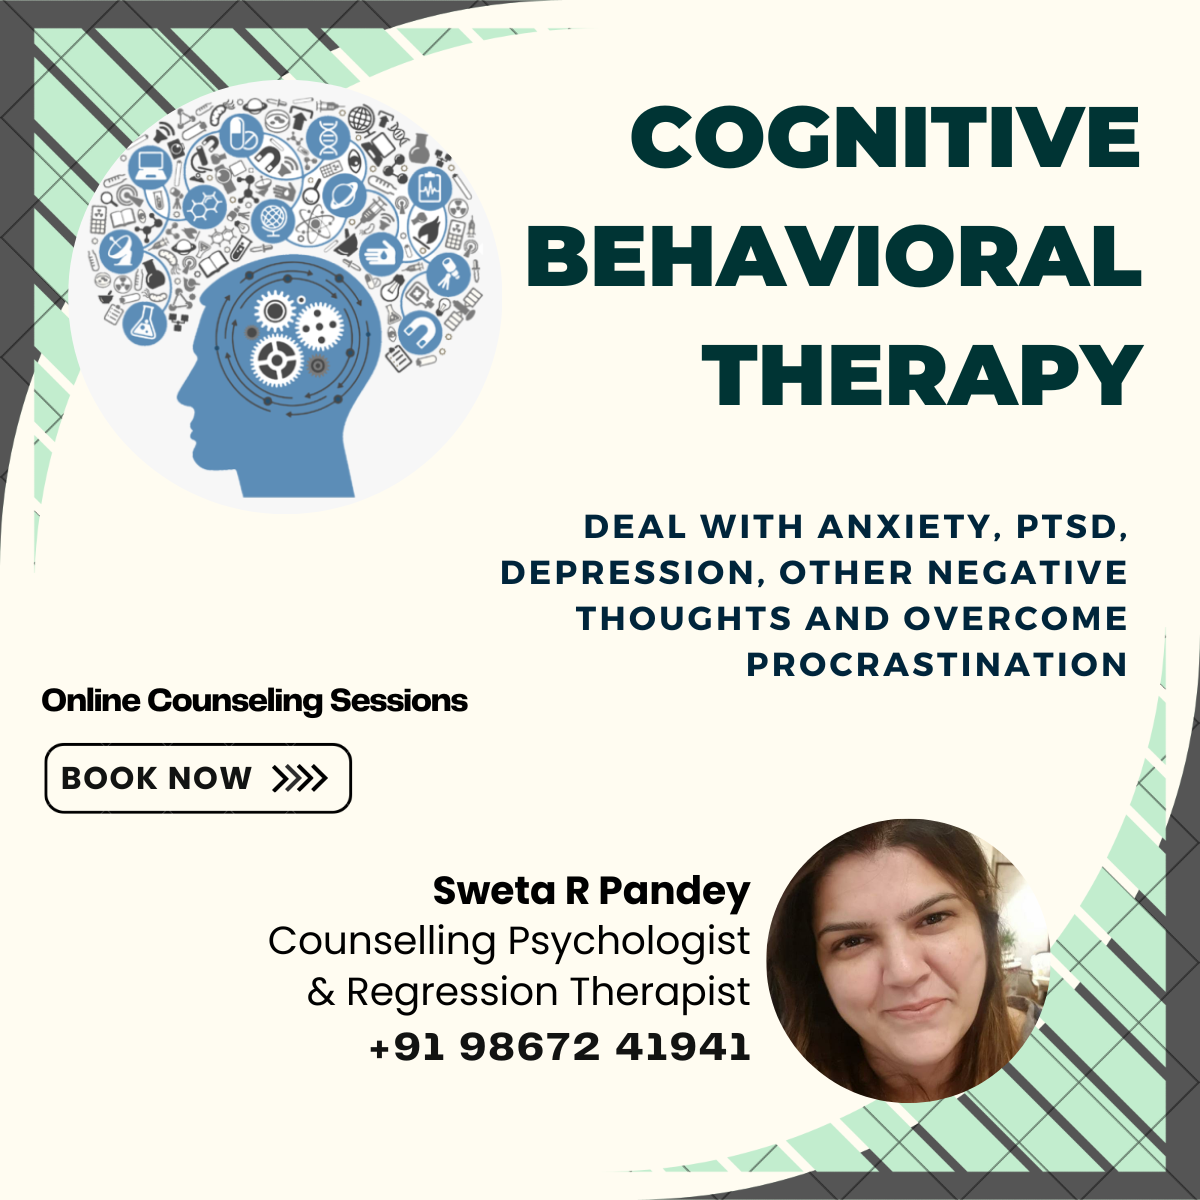 Sweta R Pandey - Cognitive Behavioral Therapy - Pondicherry